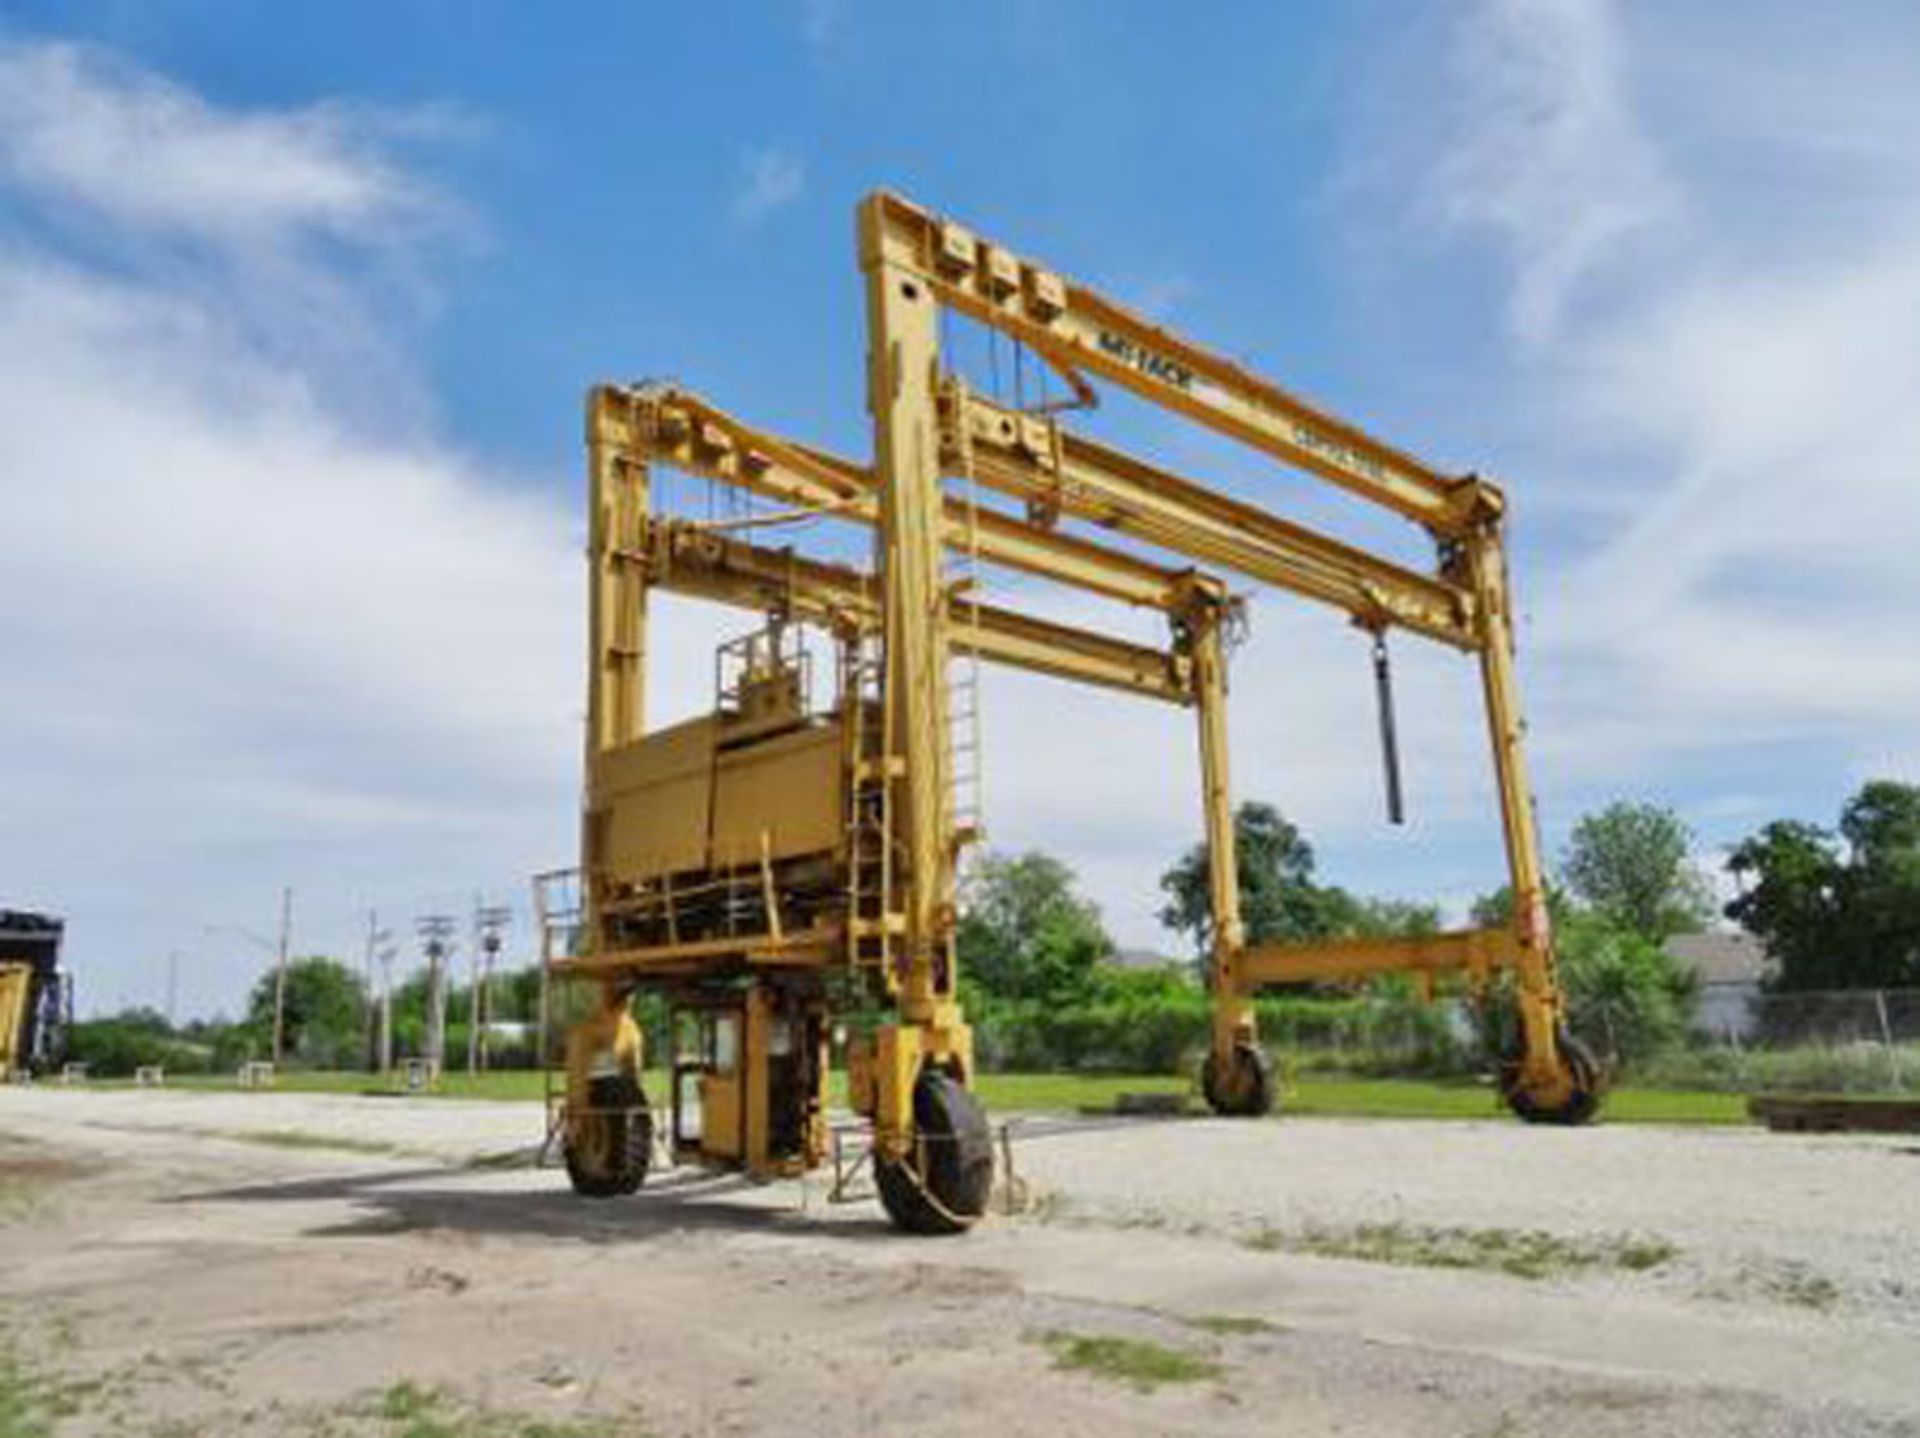 40 Ton Drott Straddle Mobile Gantry Crane, S/N 6211685, 40 Ton Main Hoist, 40' Bridge Span, 25'